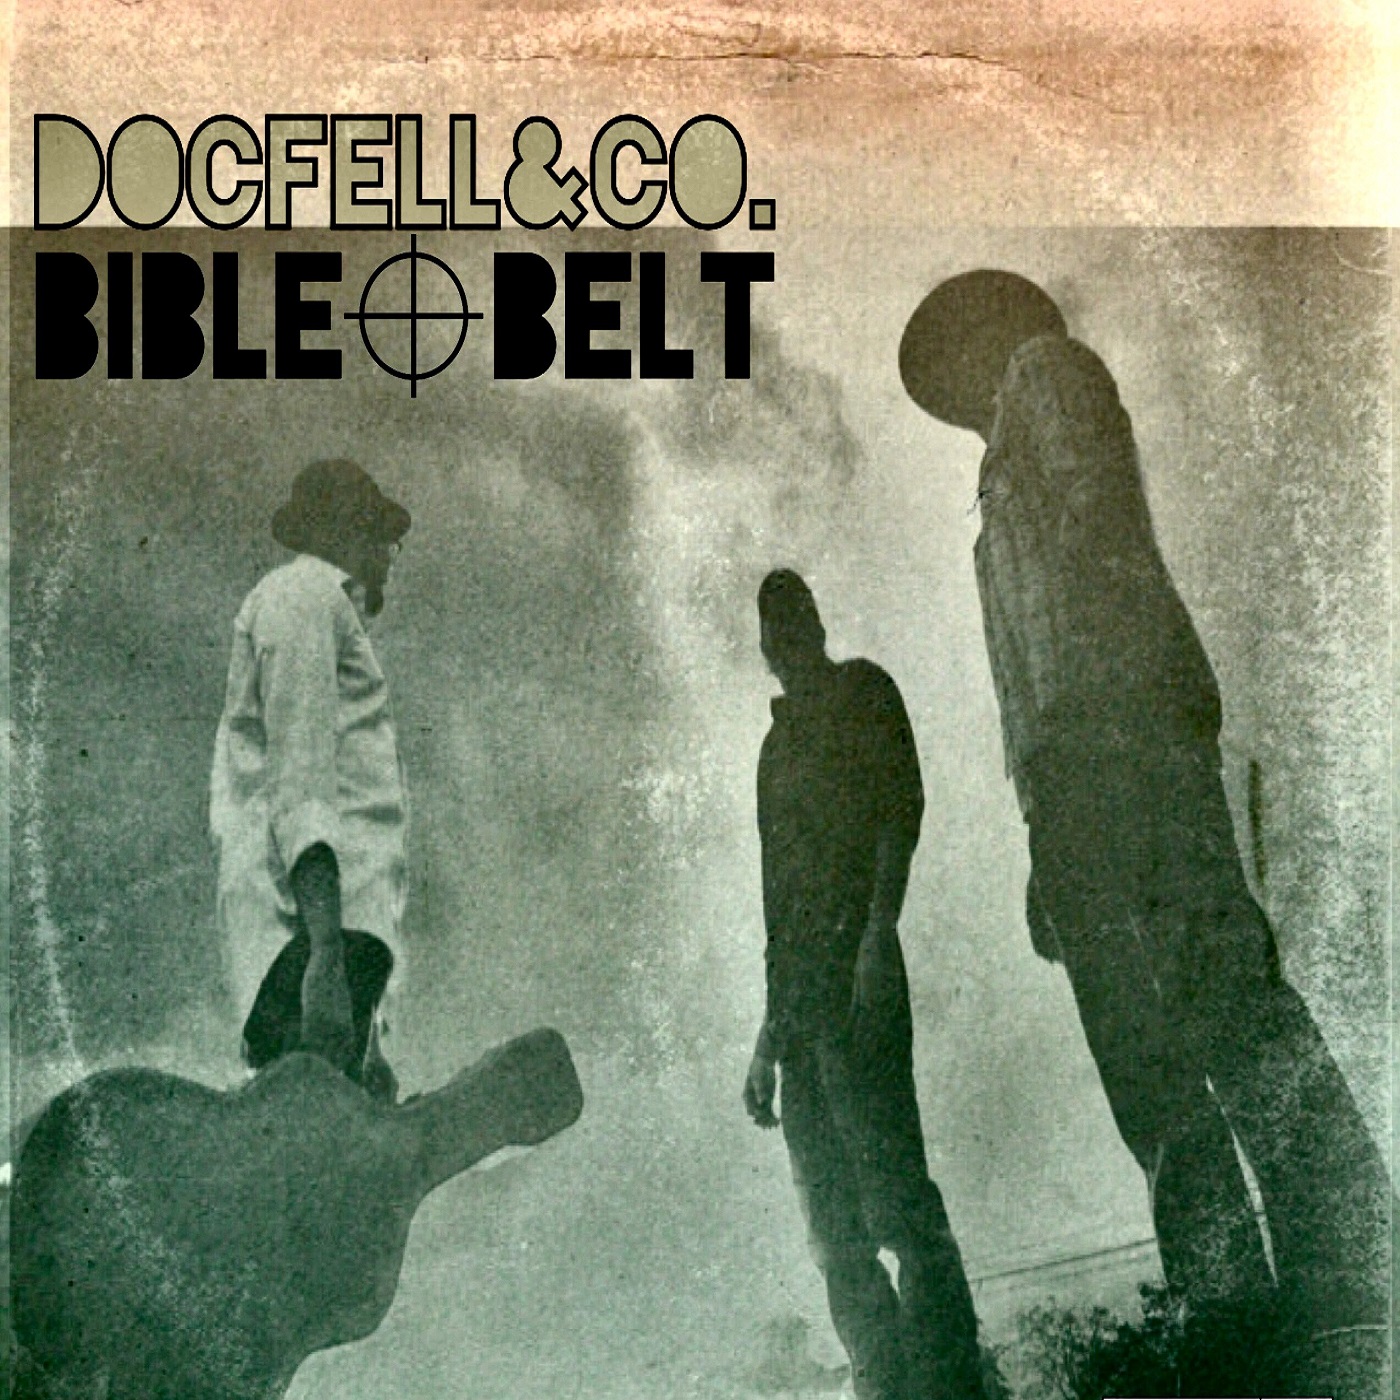 DocFell & Co.'s "Bible Belt" single